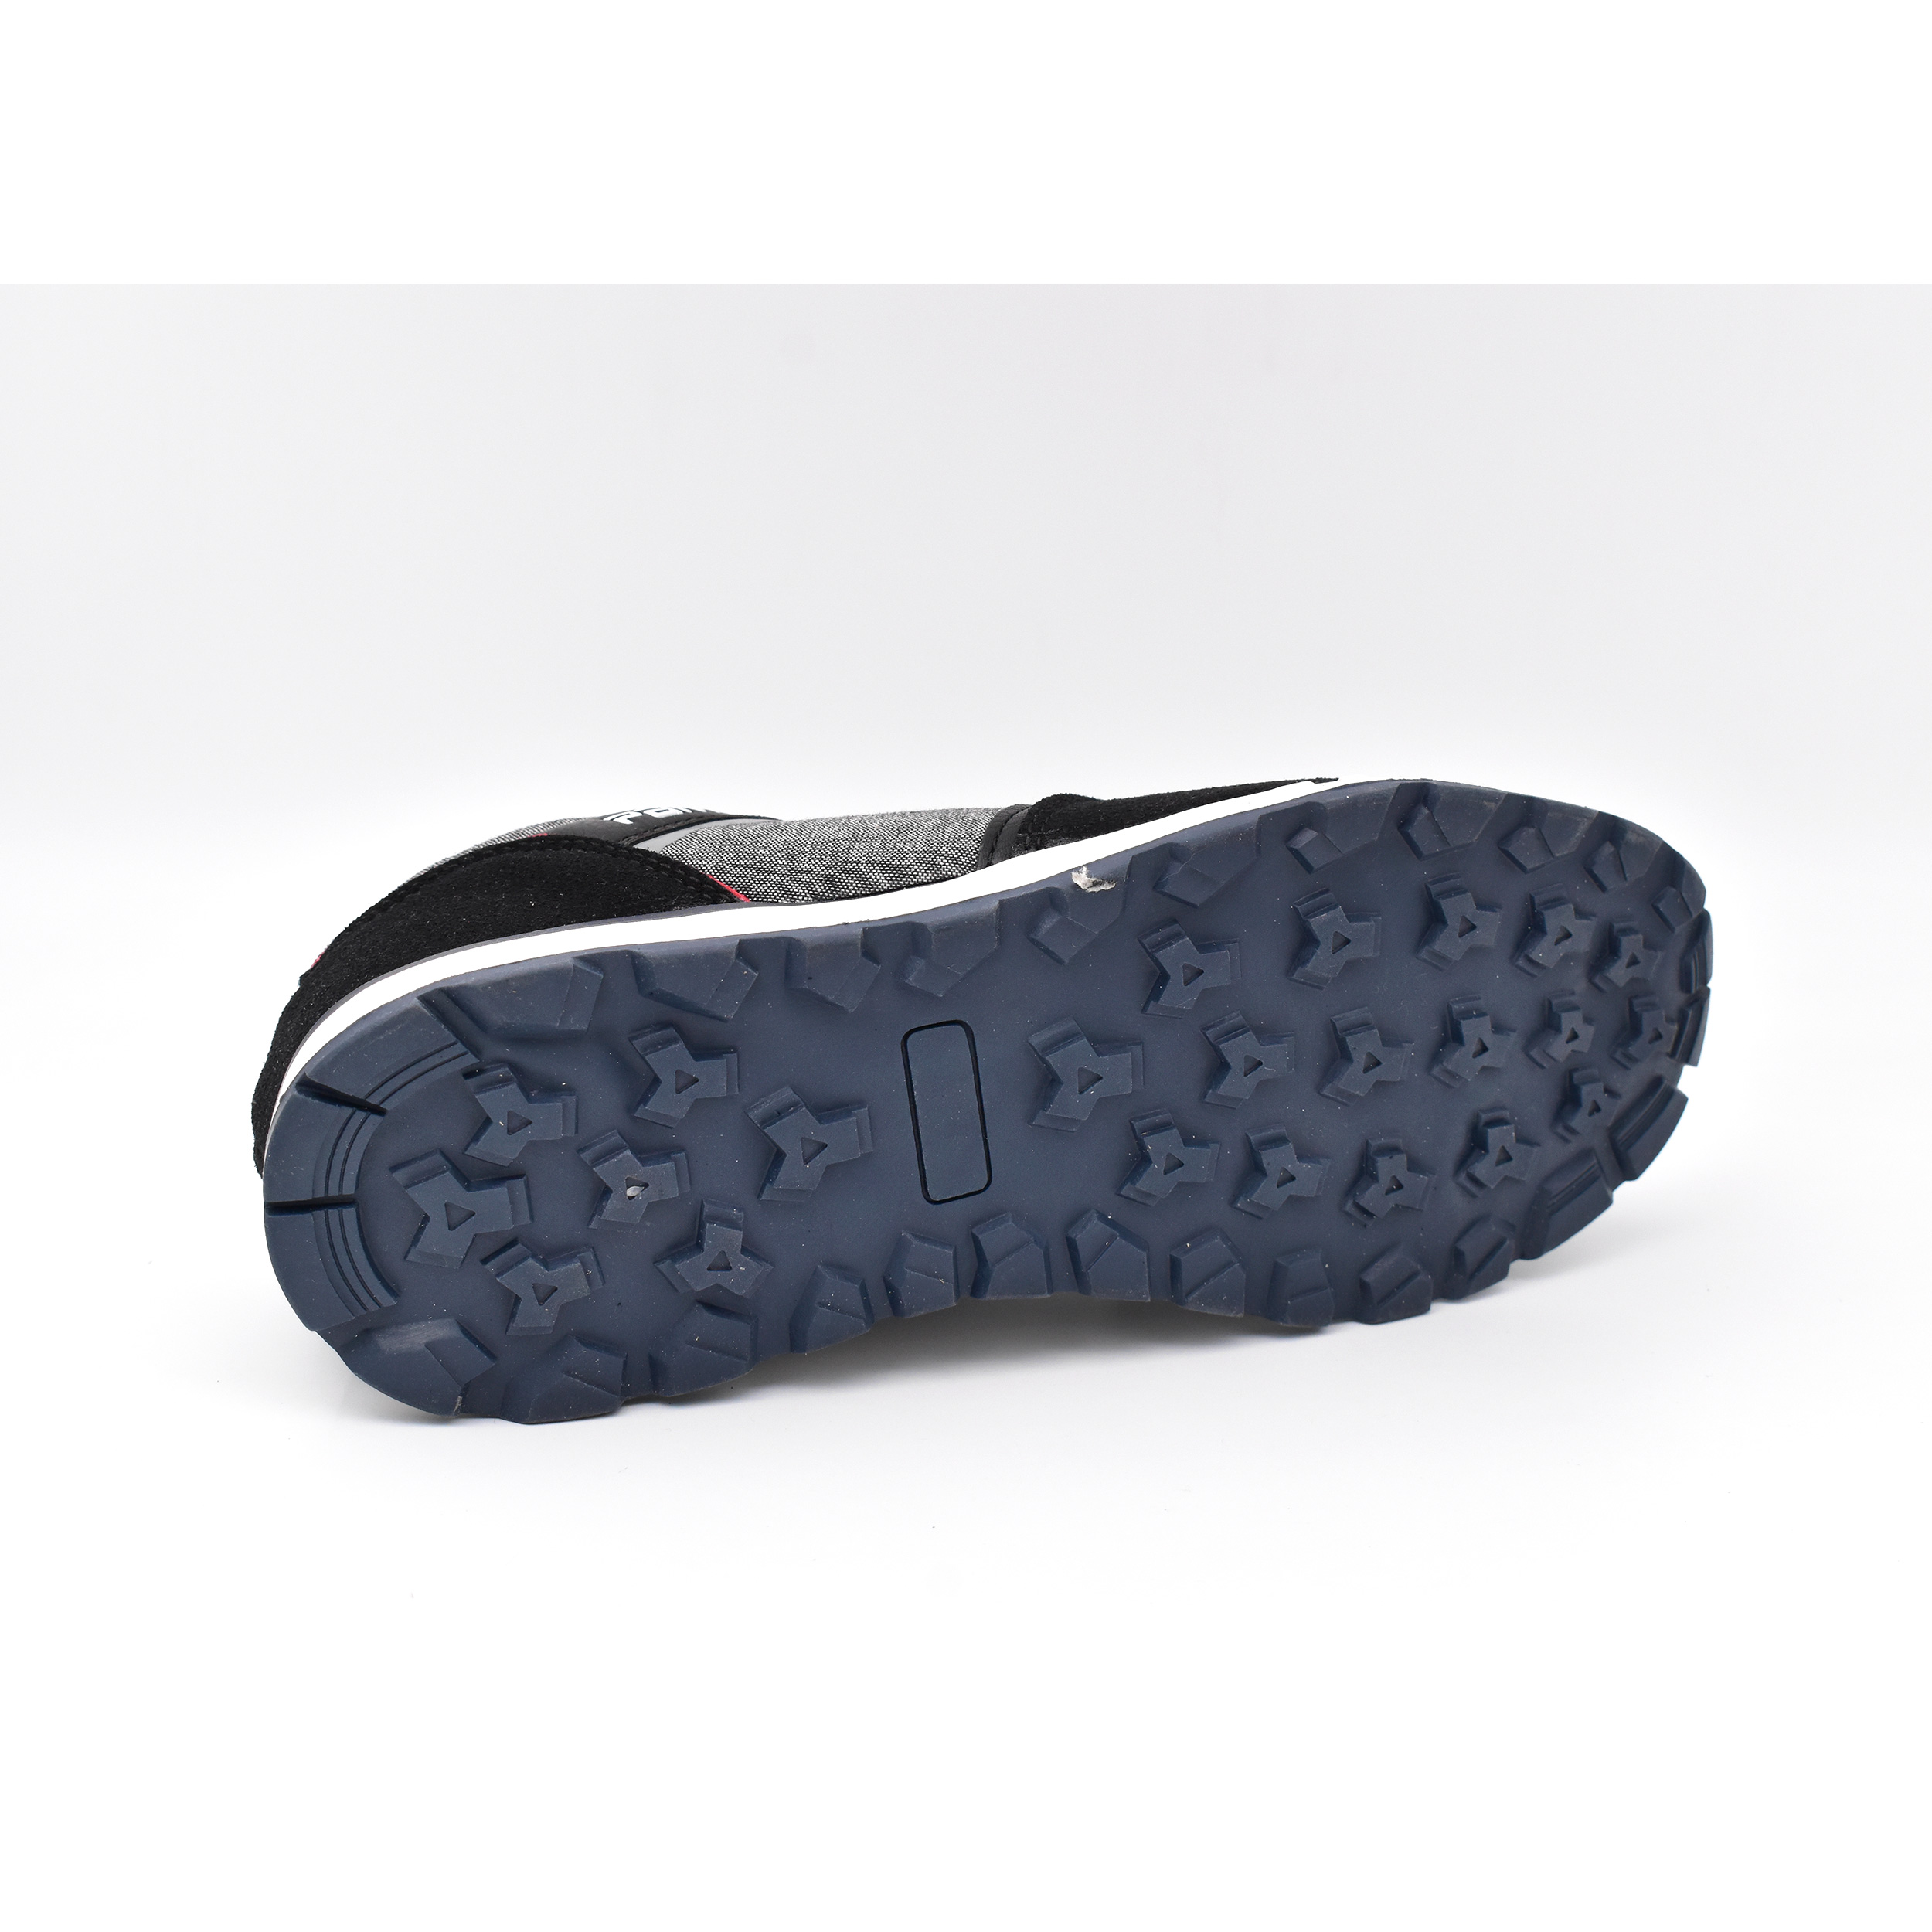 کفش روزمره مردانه پاما مدل کارن کد G1484 -  - 9